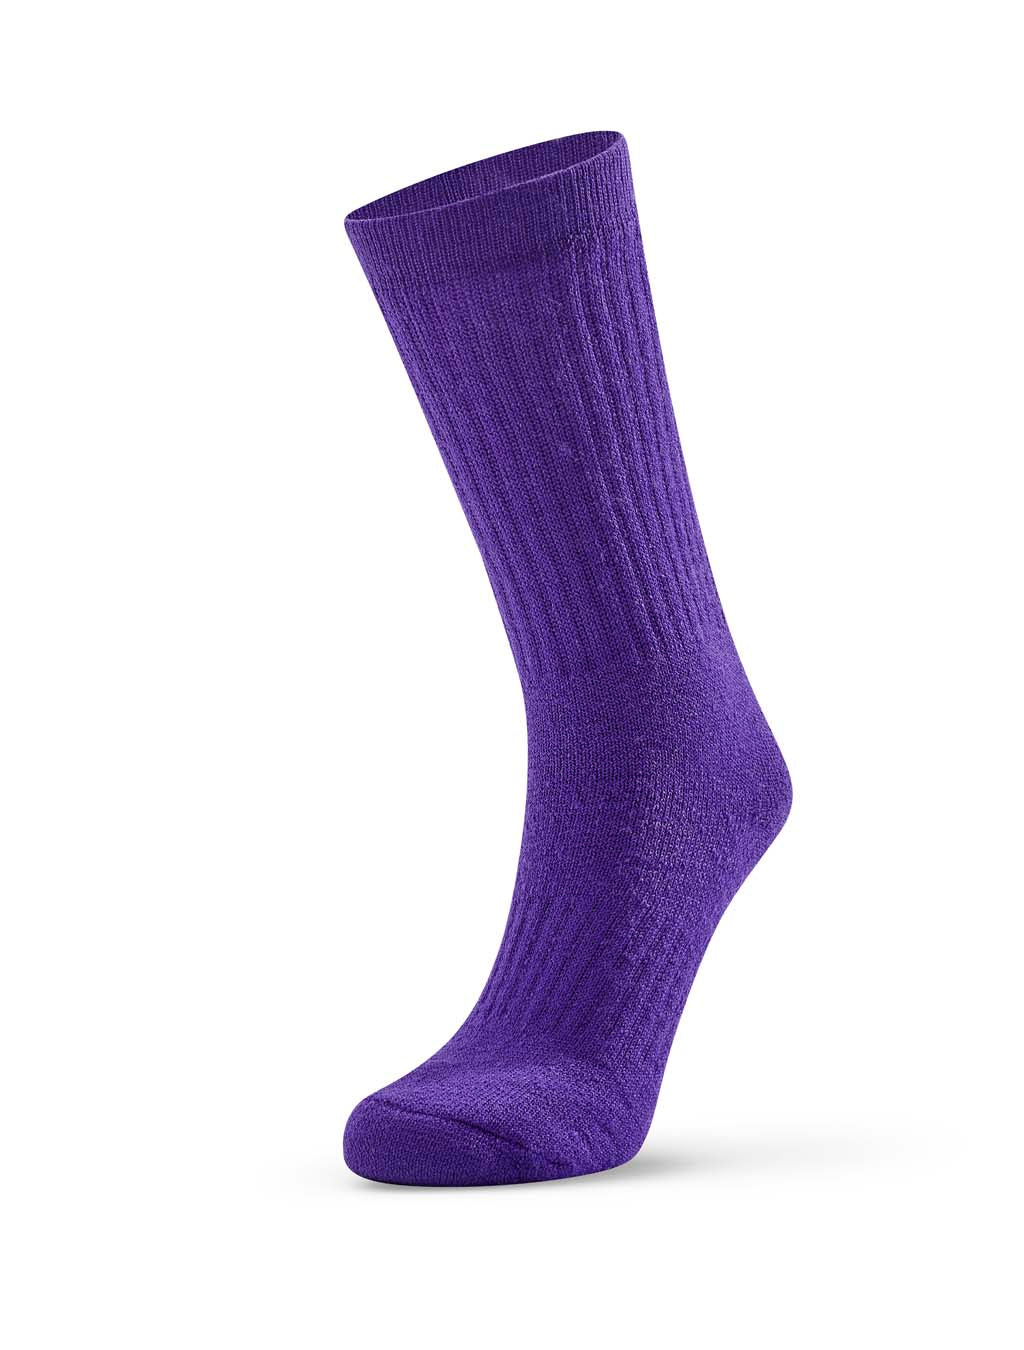 Southern Merino Sock - Purple